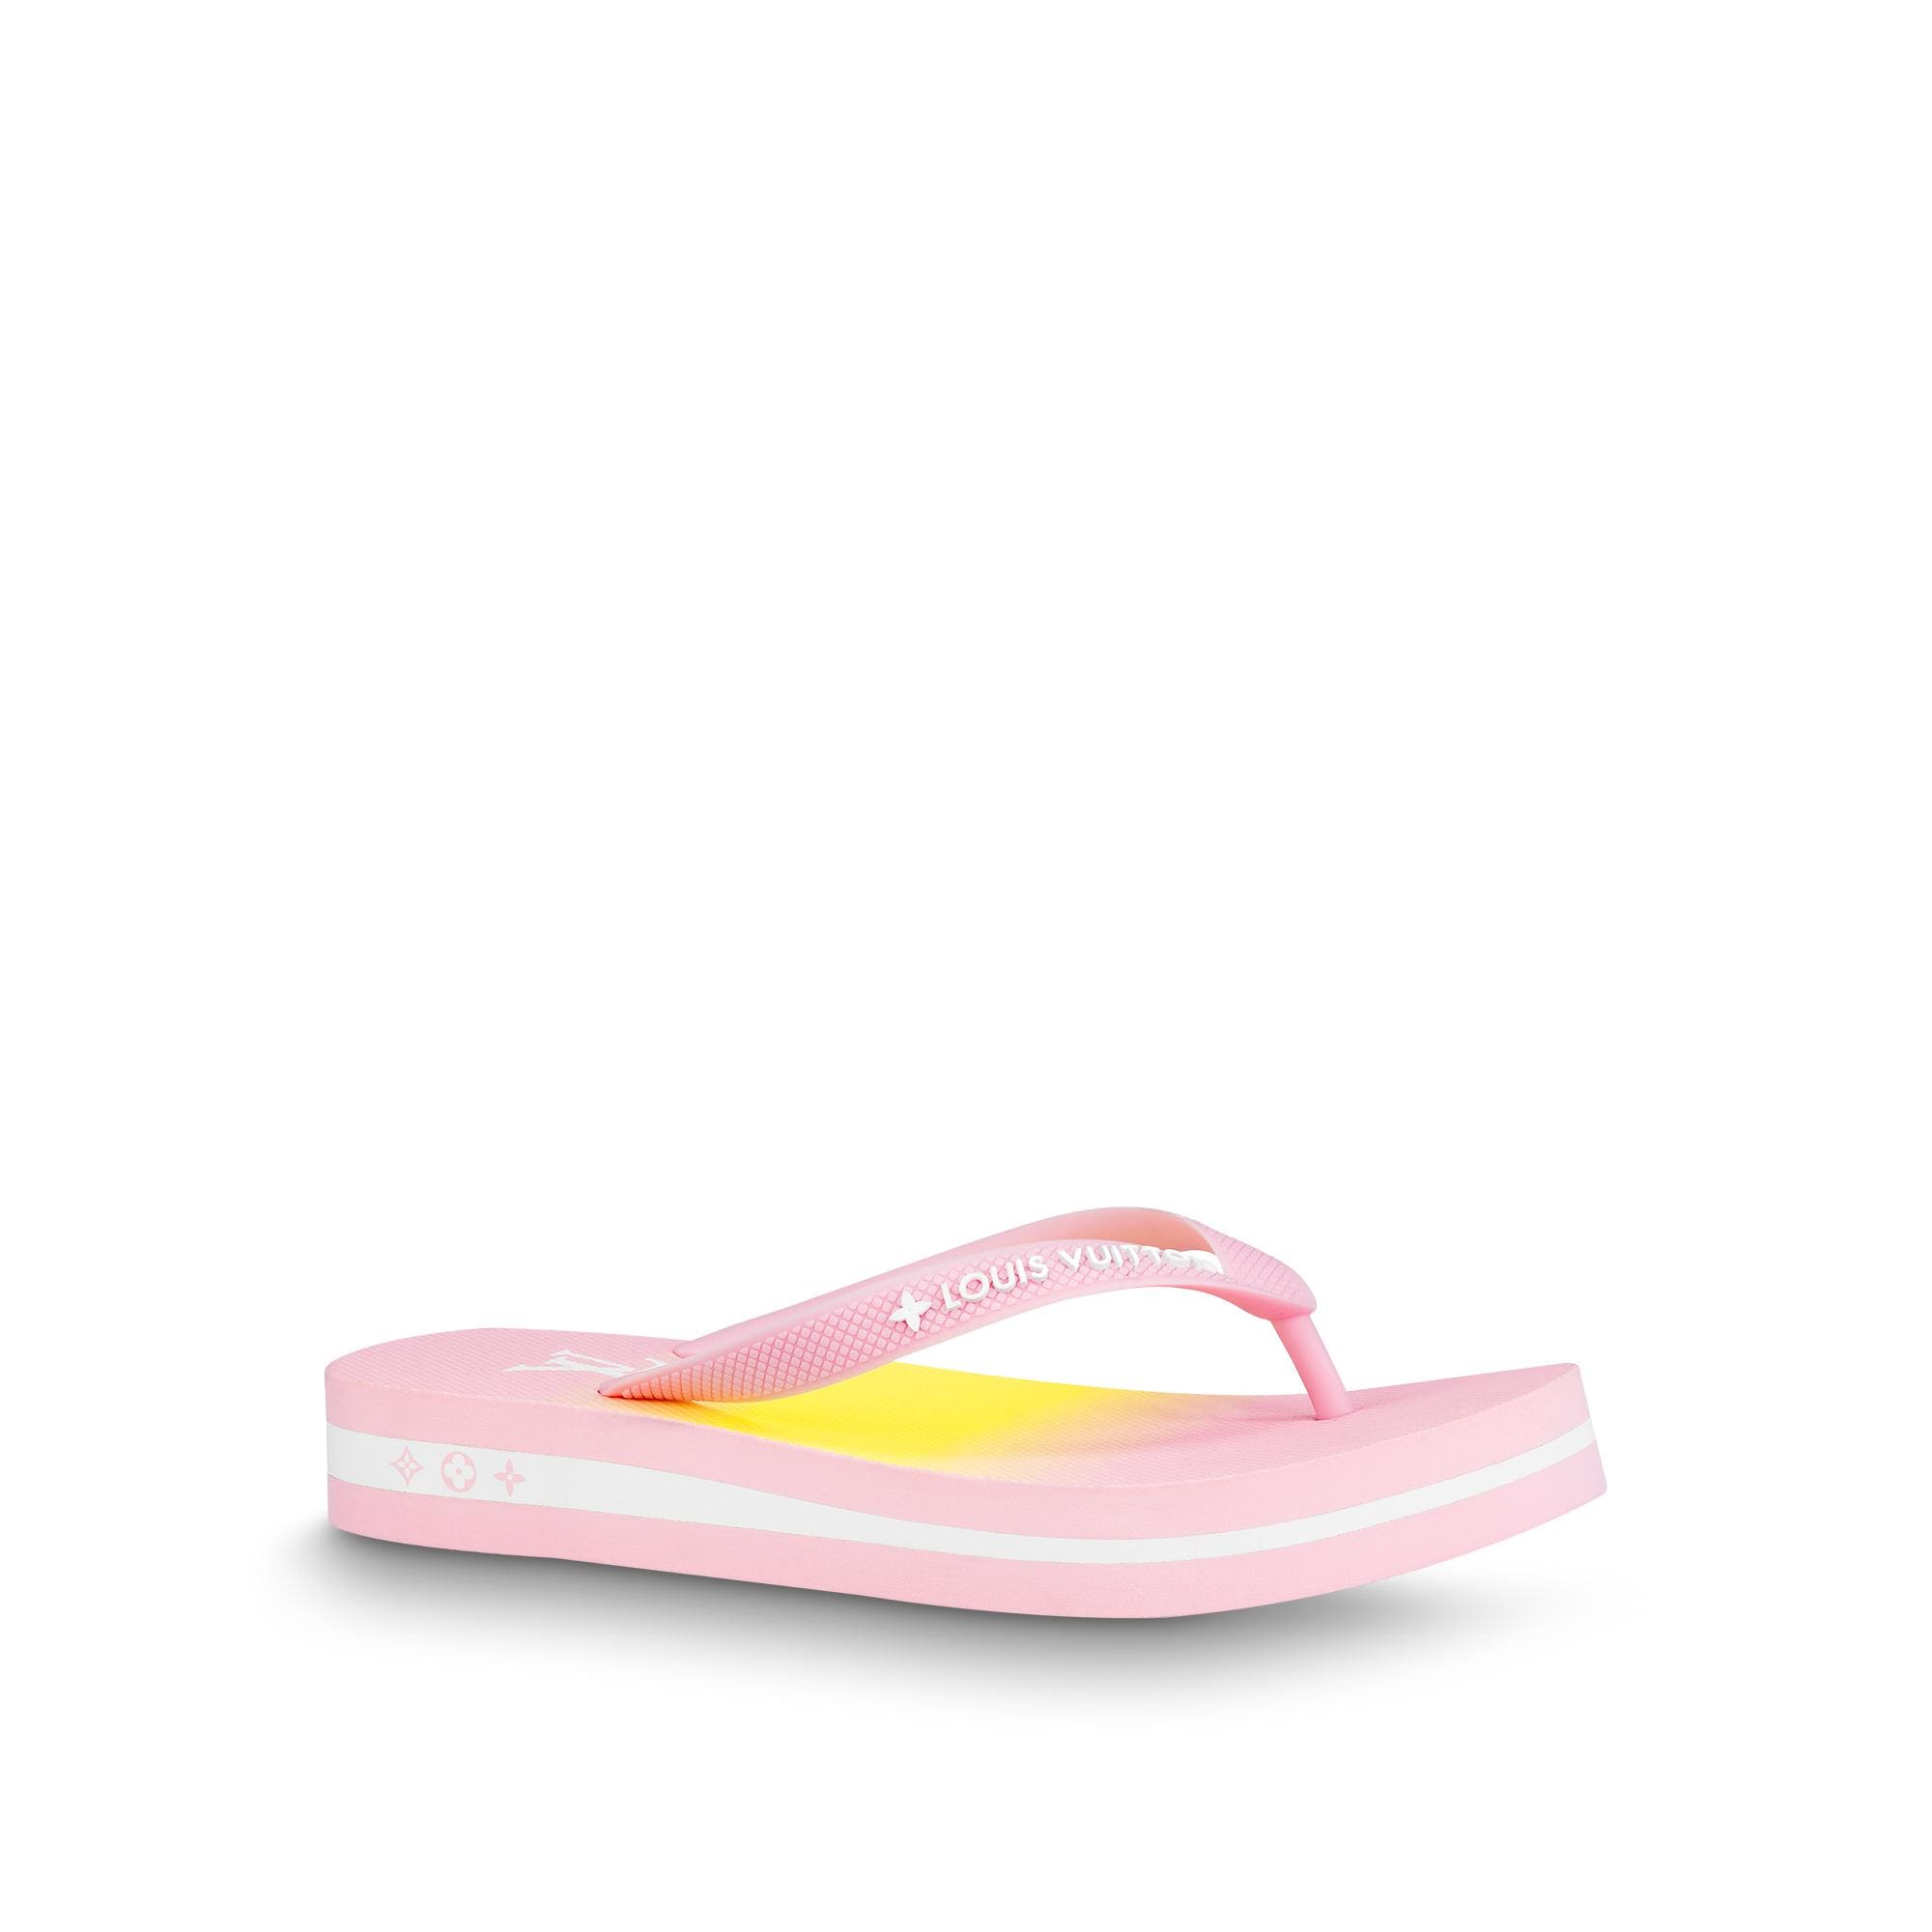 Louis Vuitton Bom Dia Flat Comfort Mule Pink. Size 40.0